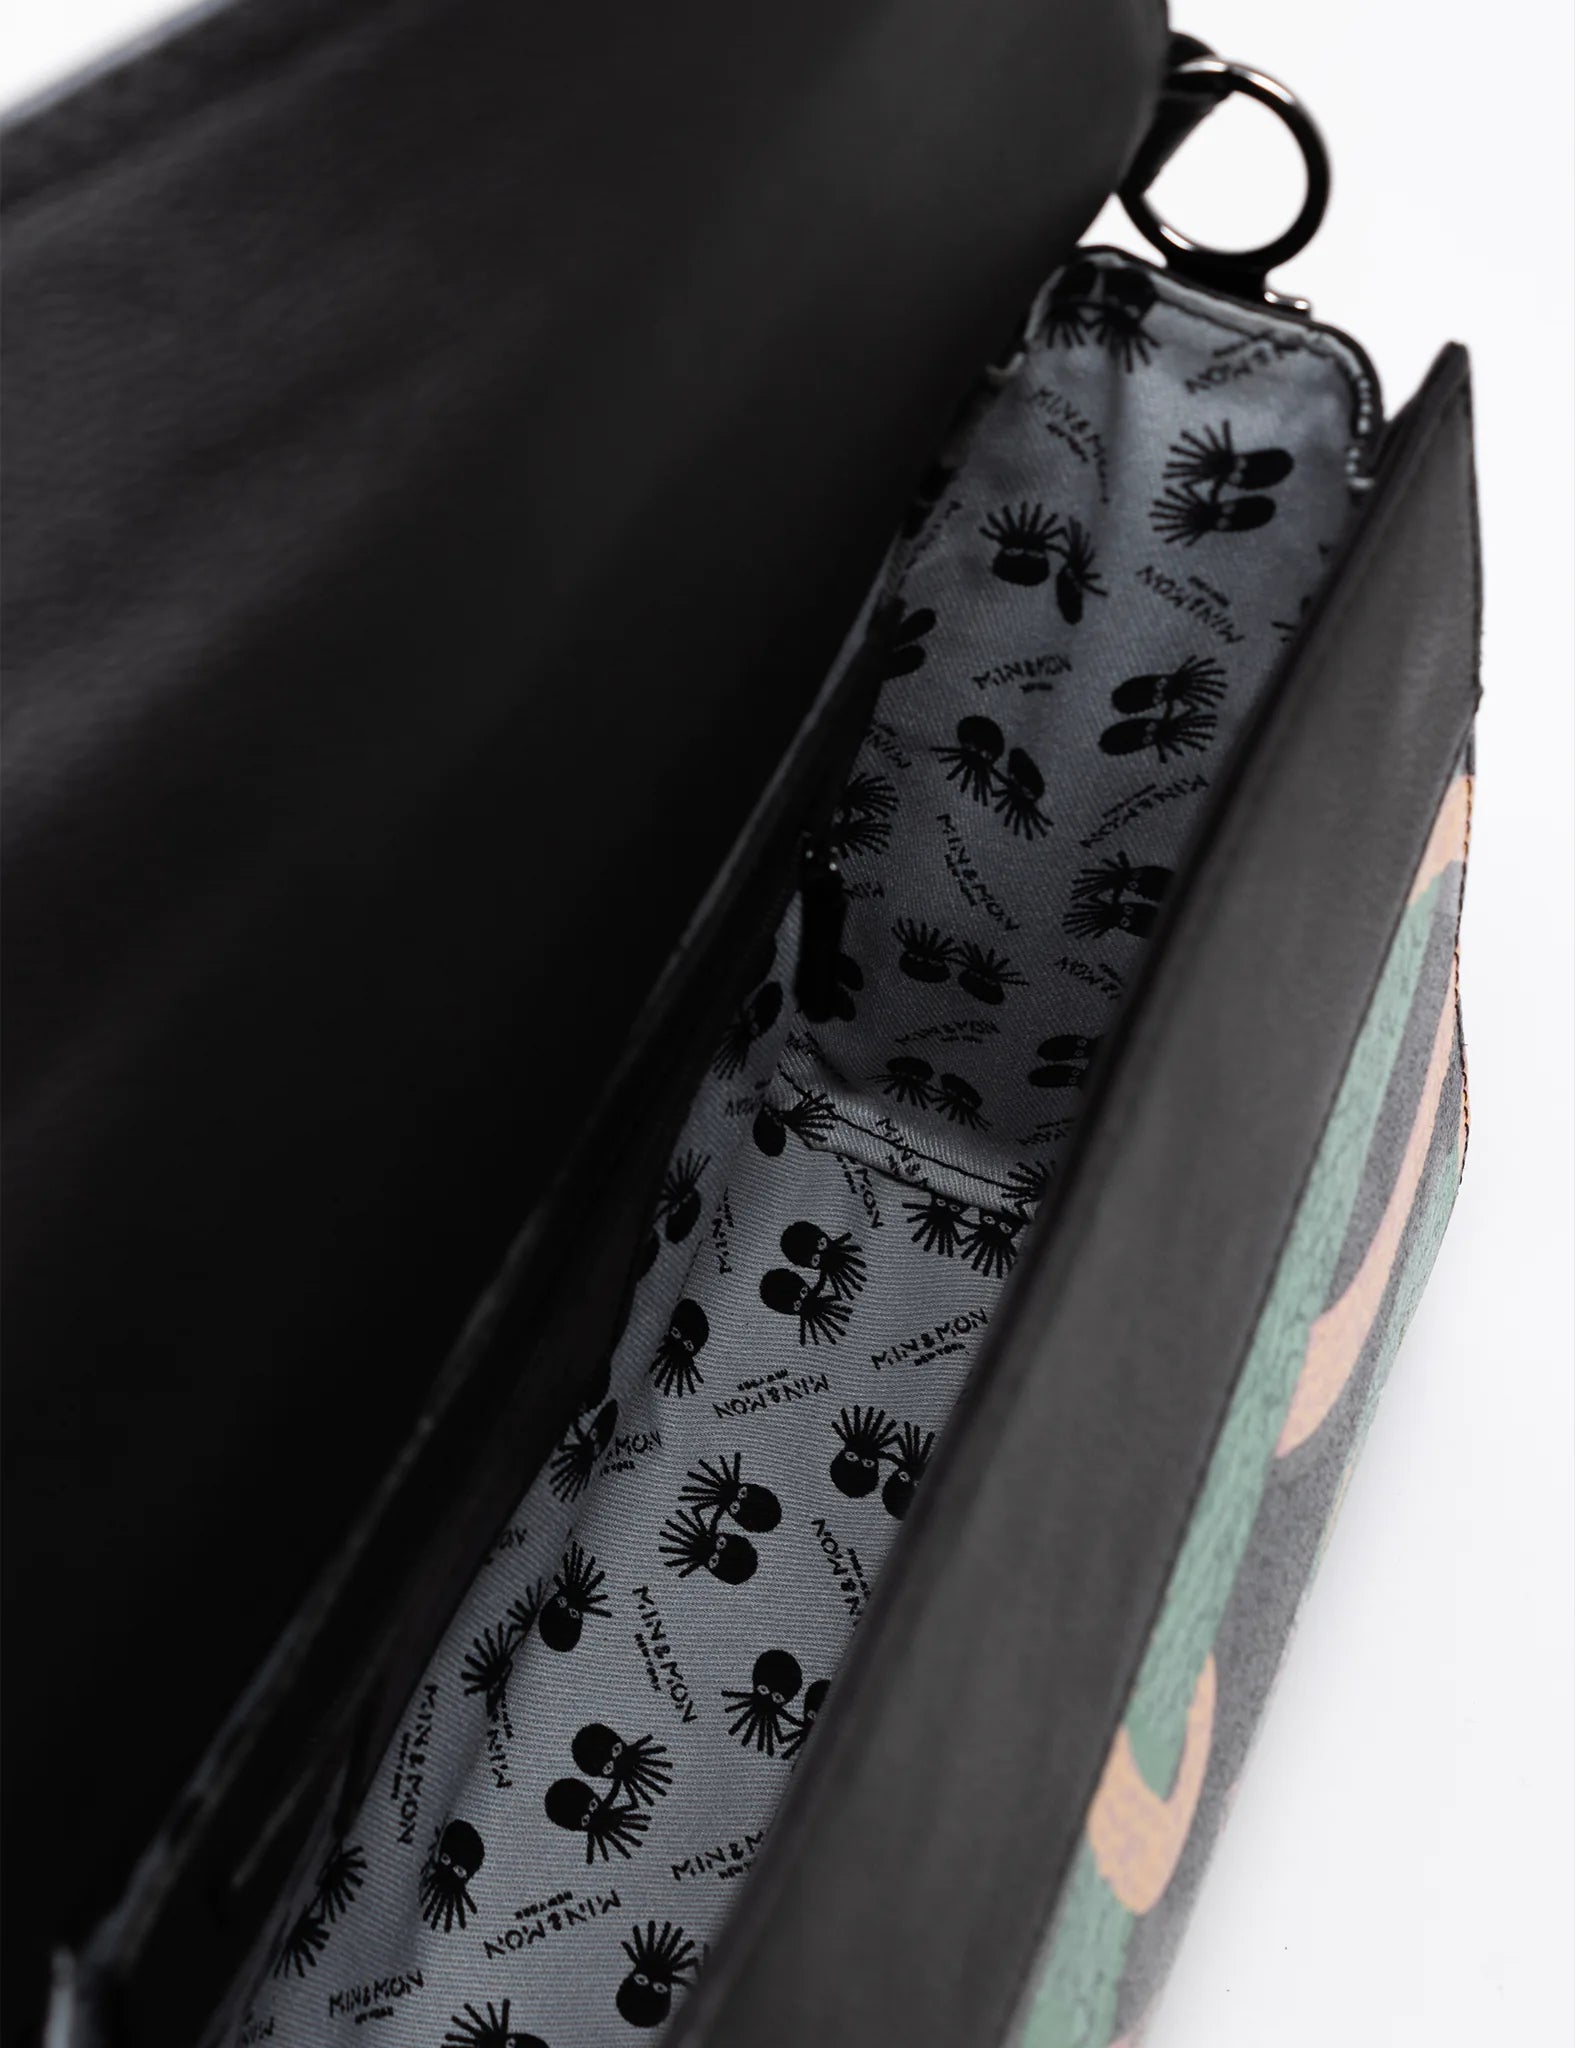 Medium Crossbody Handbag Black Leather - Tiger And Snake Print - Inside view